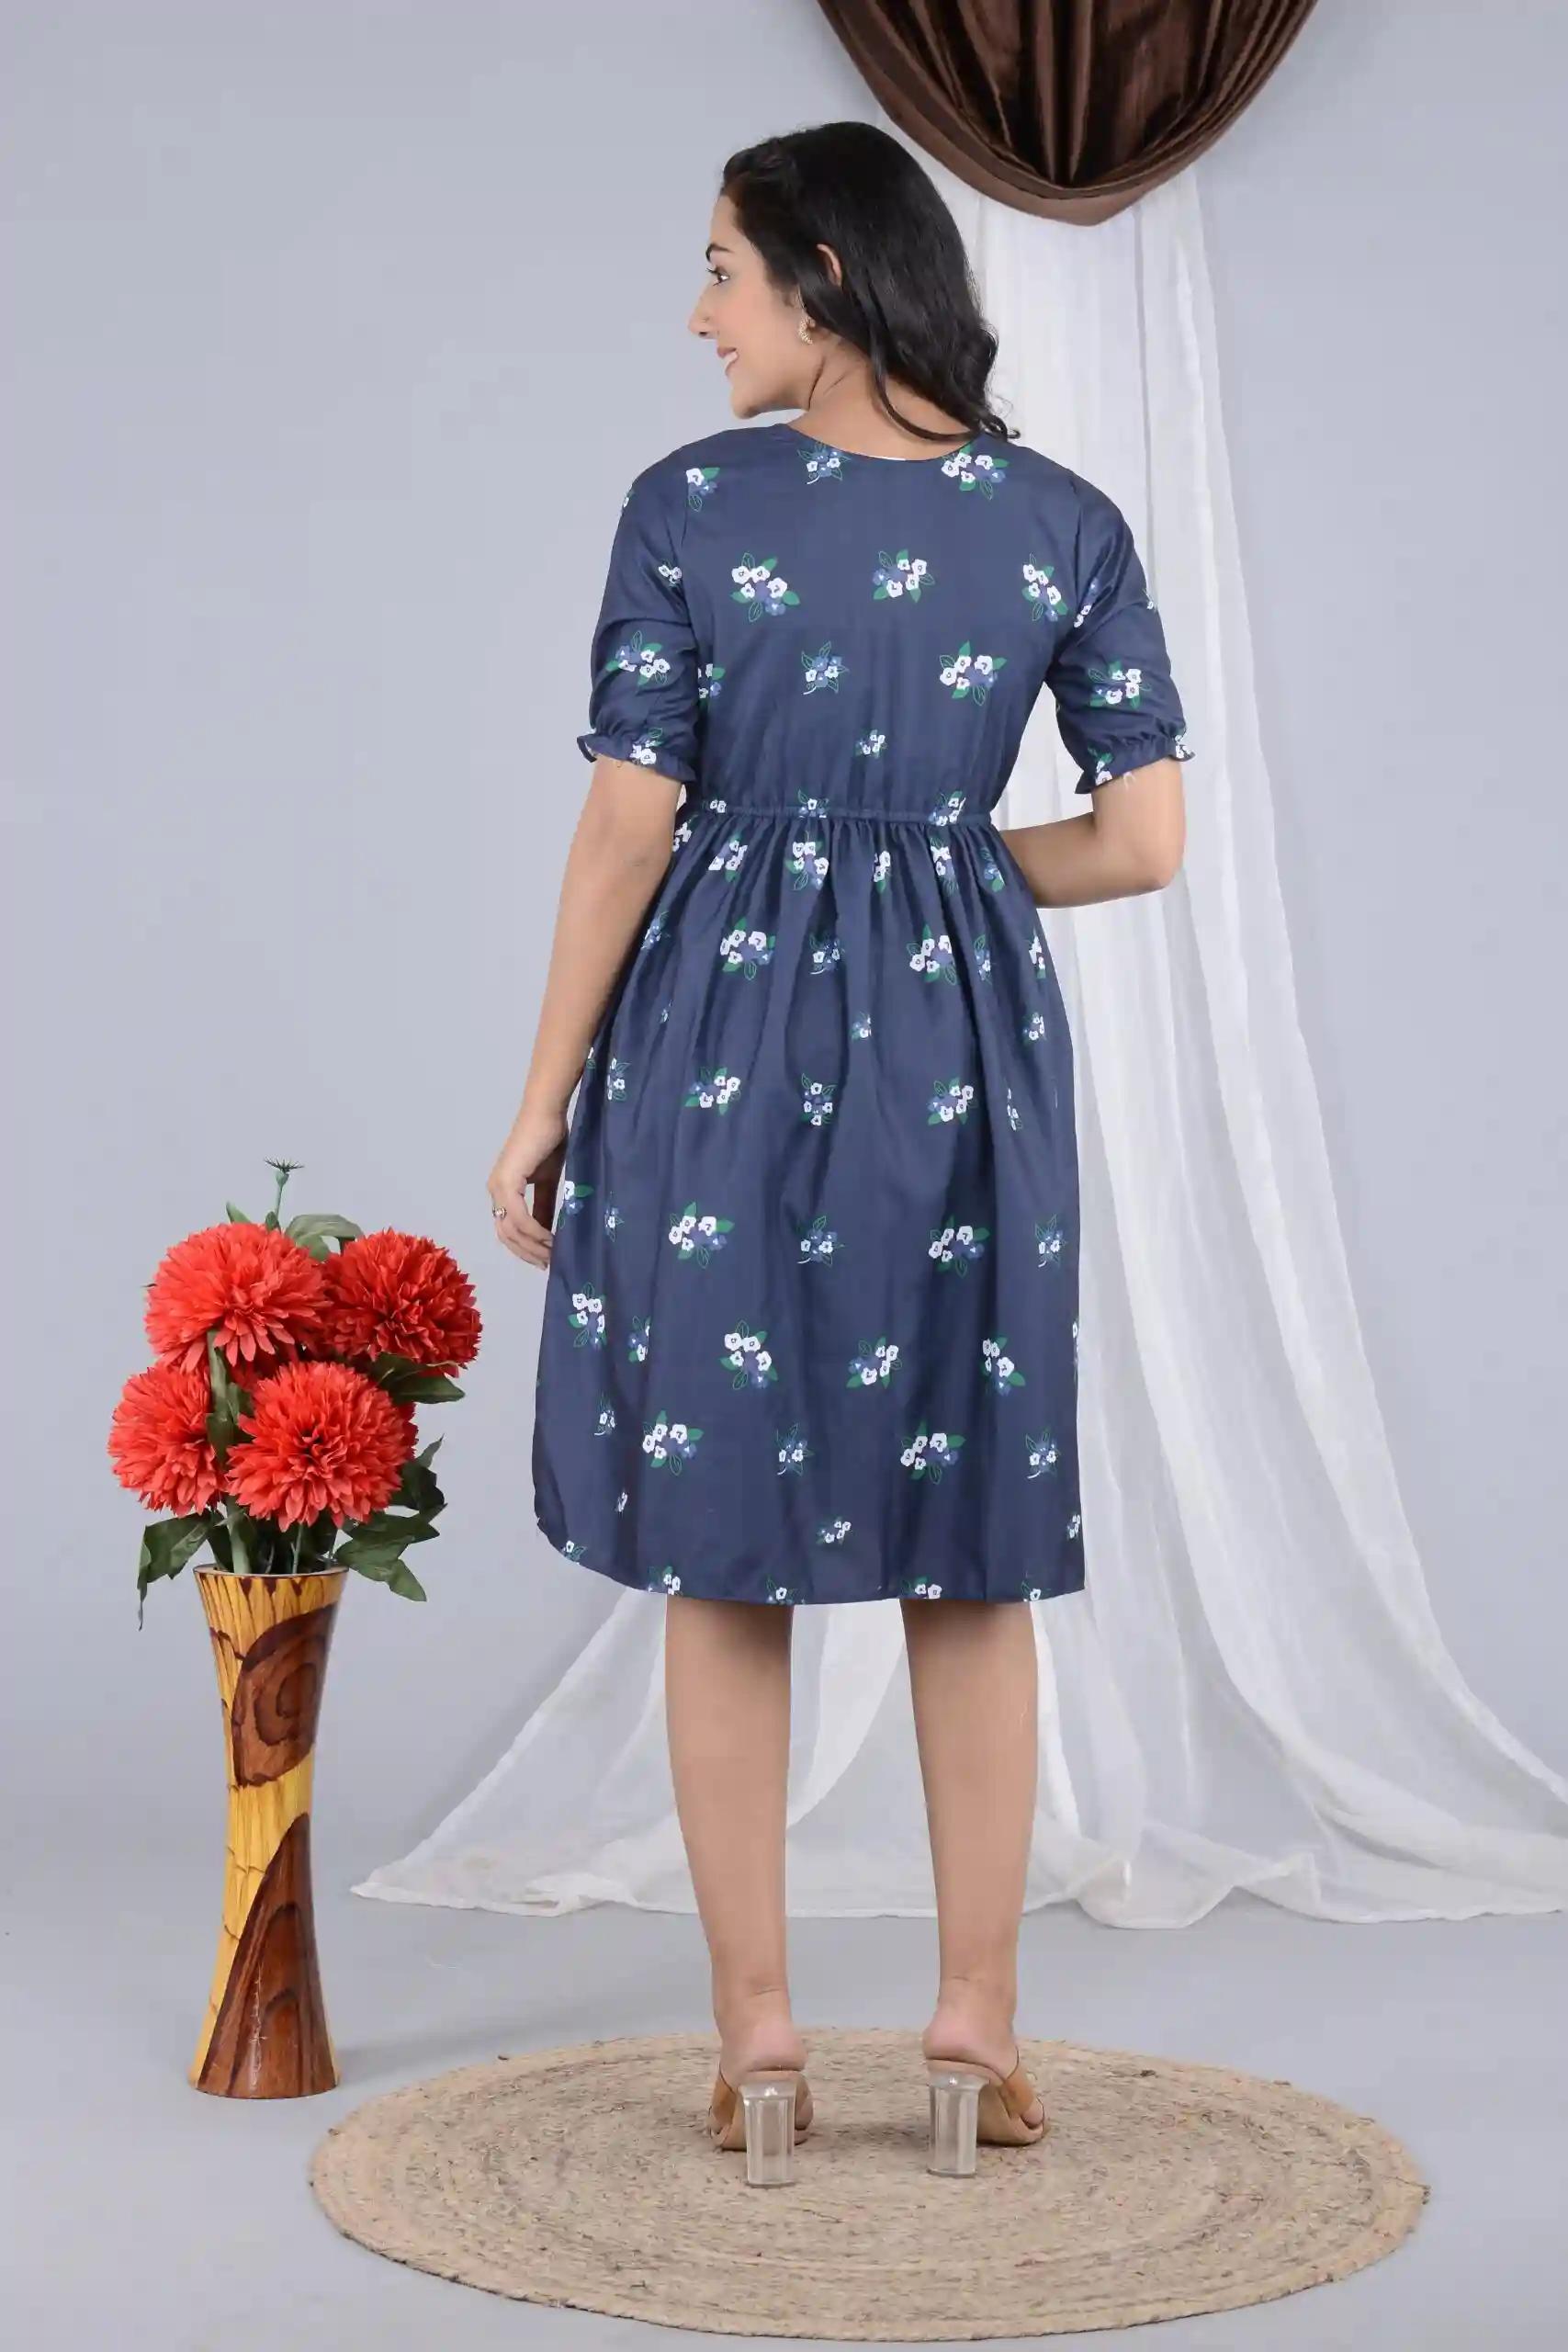 Floral Print Knee Length Navy Blue Dress for Women - S